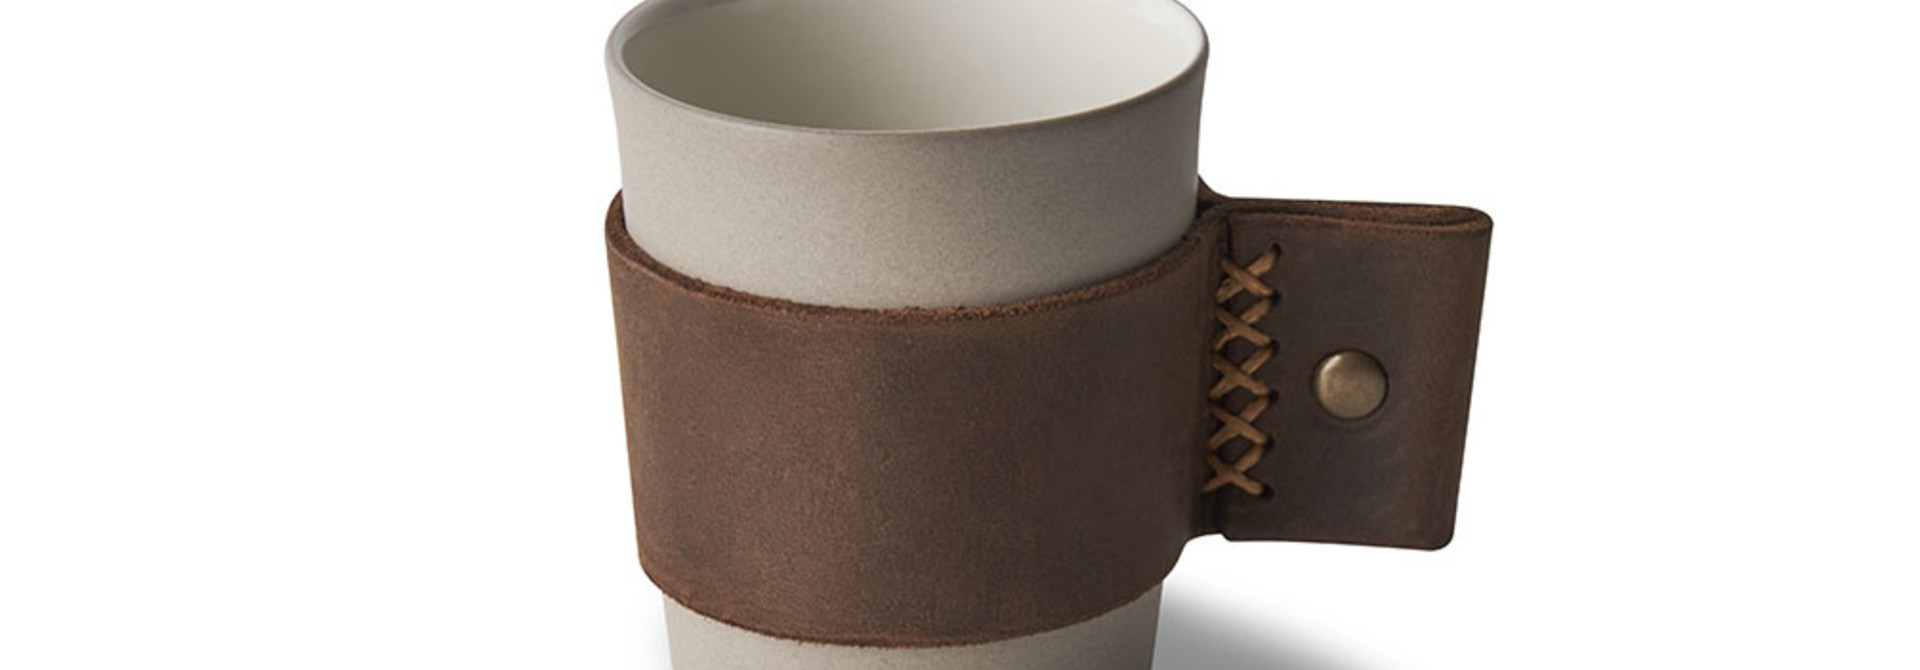 Espresso Cup With Leather Porcelain - Rock&Ivory- Esma Dereboy 7.5x5.5x6cm